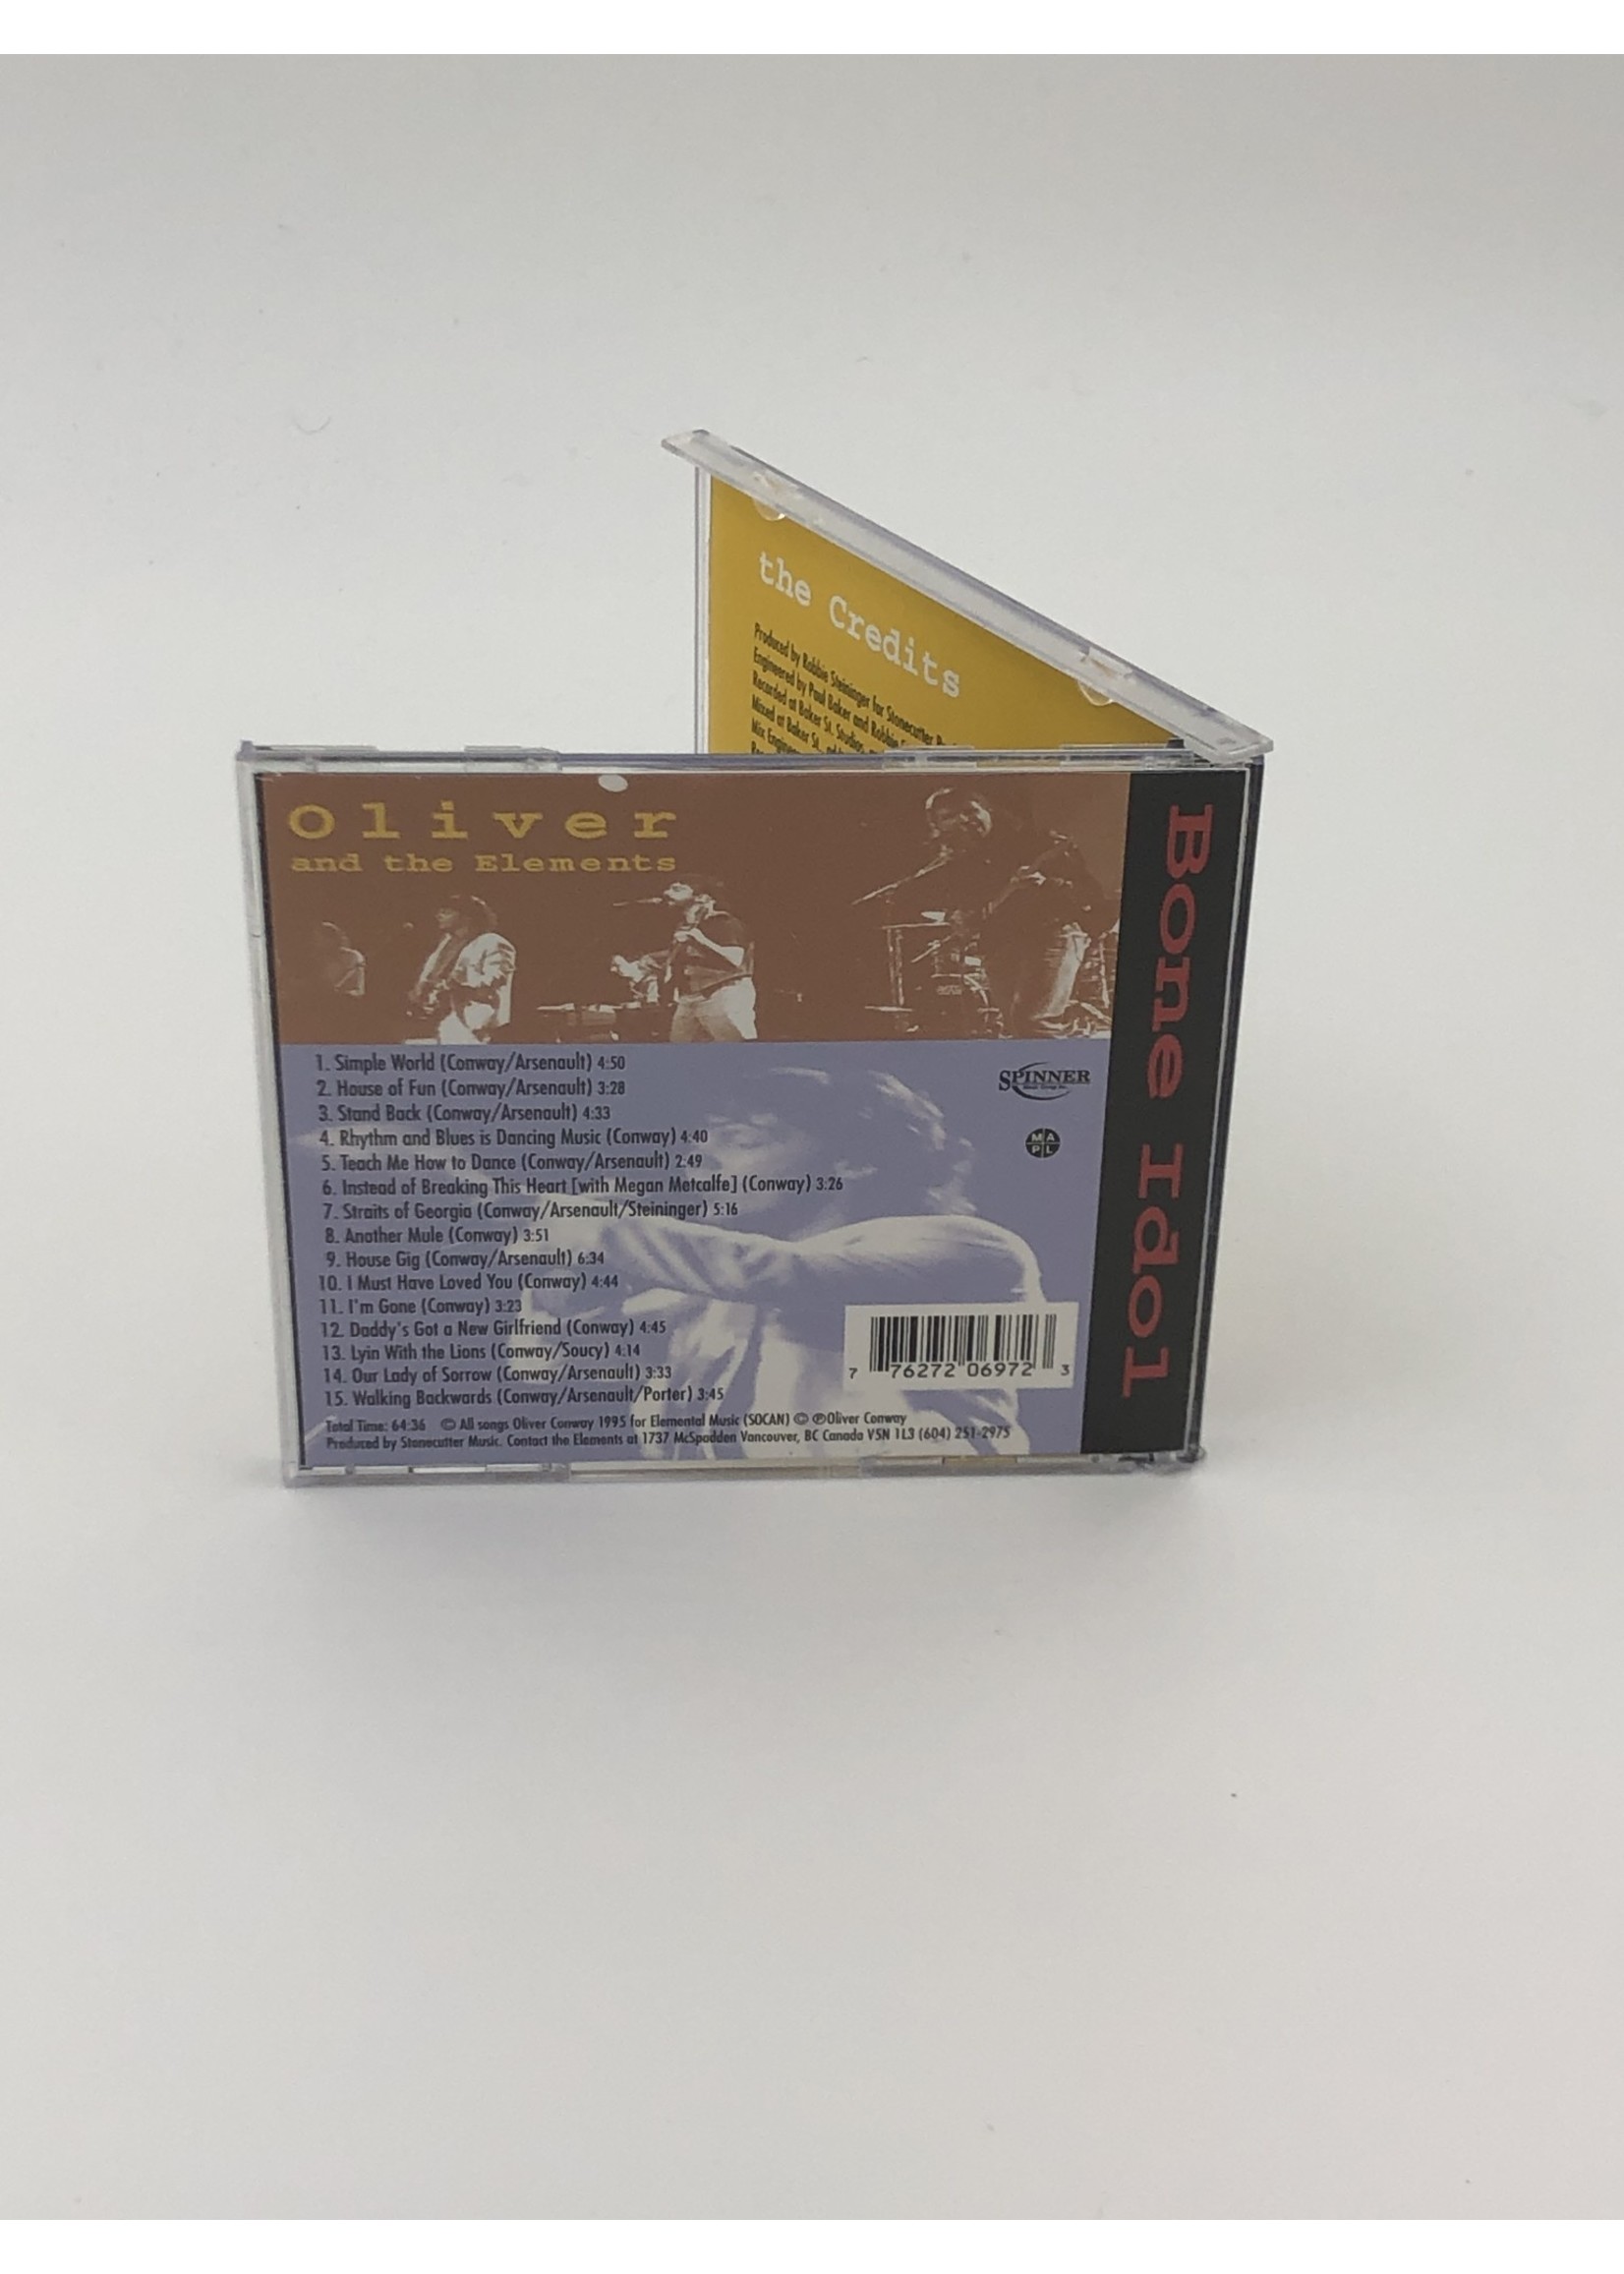 CD Oliver & The Elements: Bone Idol CD